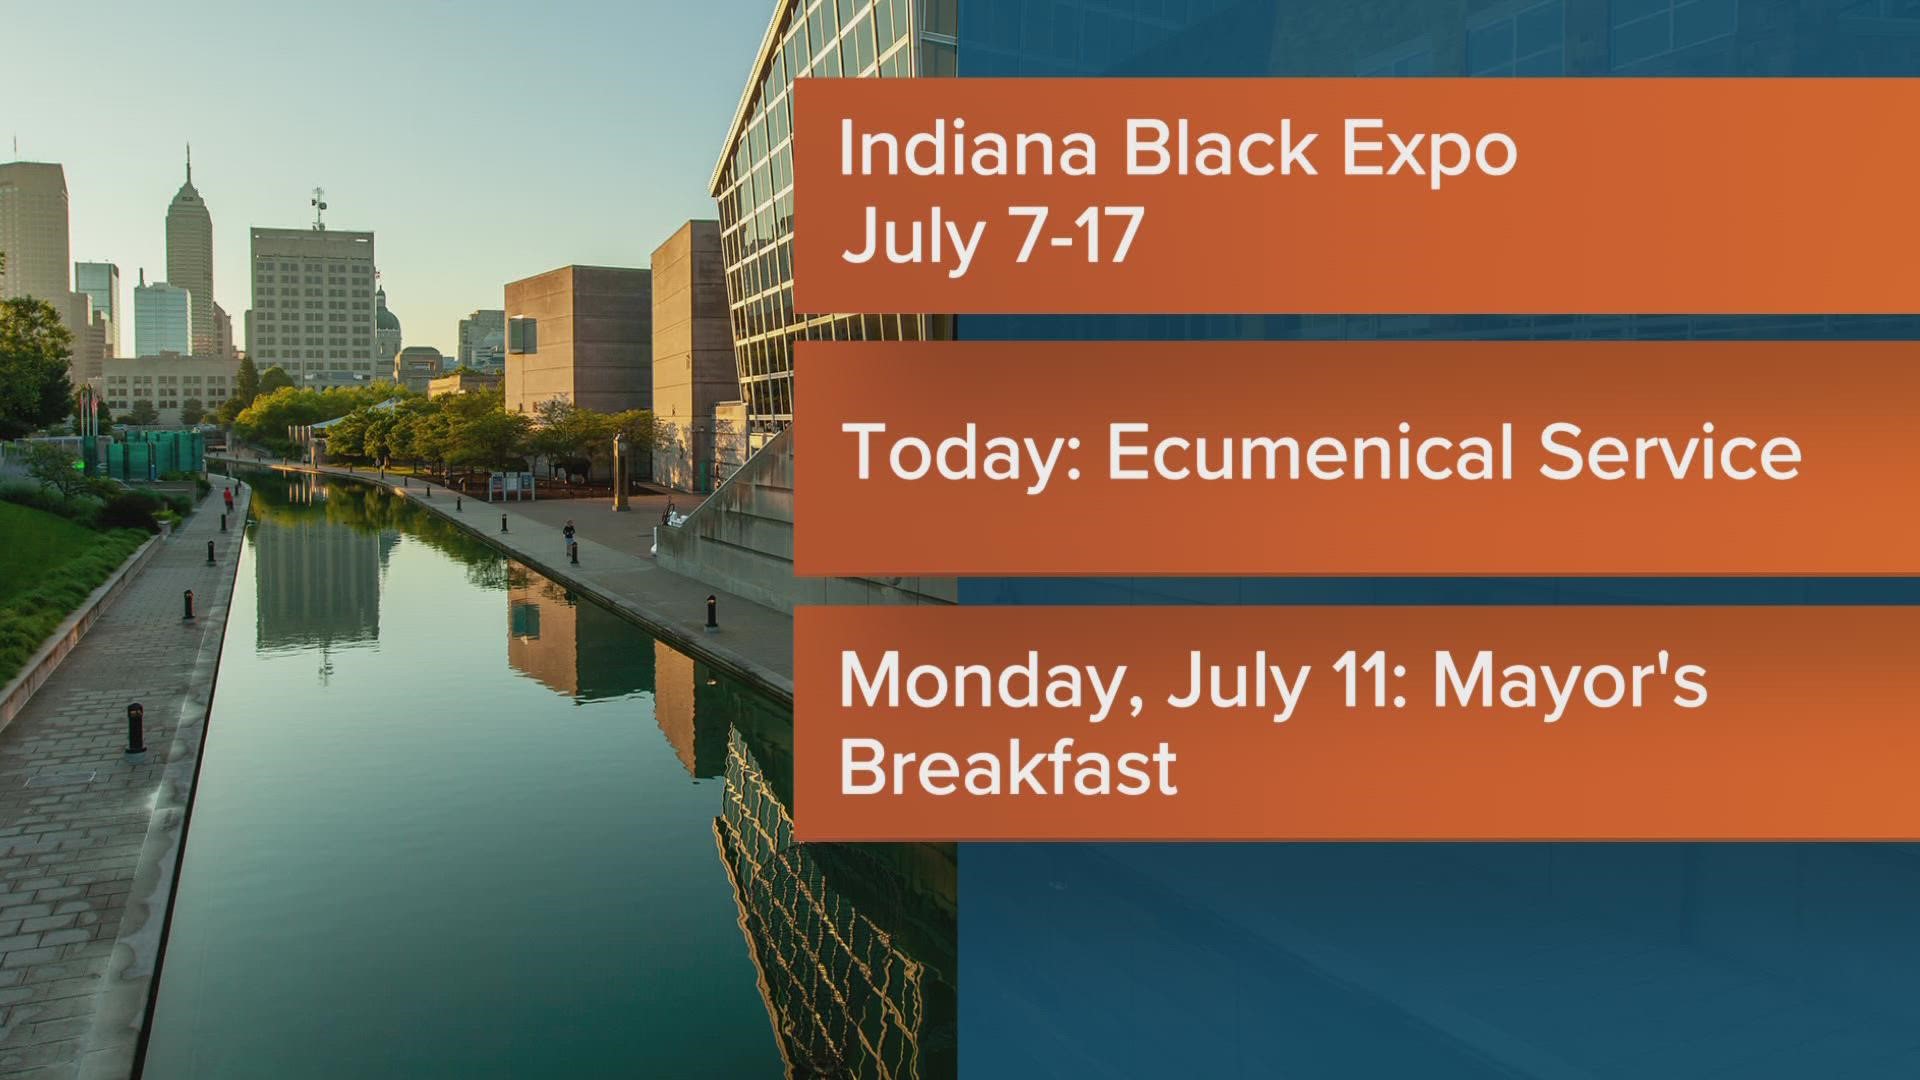 Indiana Black Expo's Summer Celebration begins Thursday